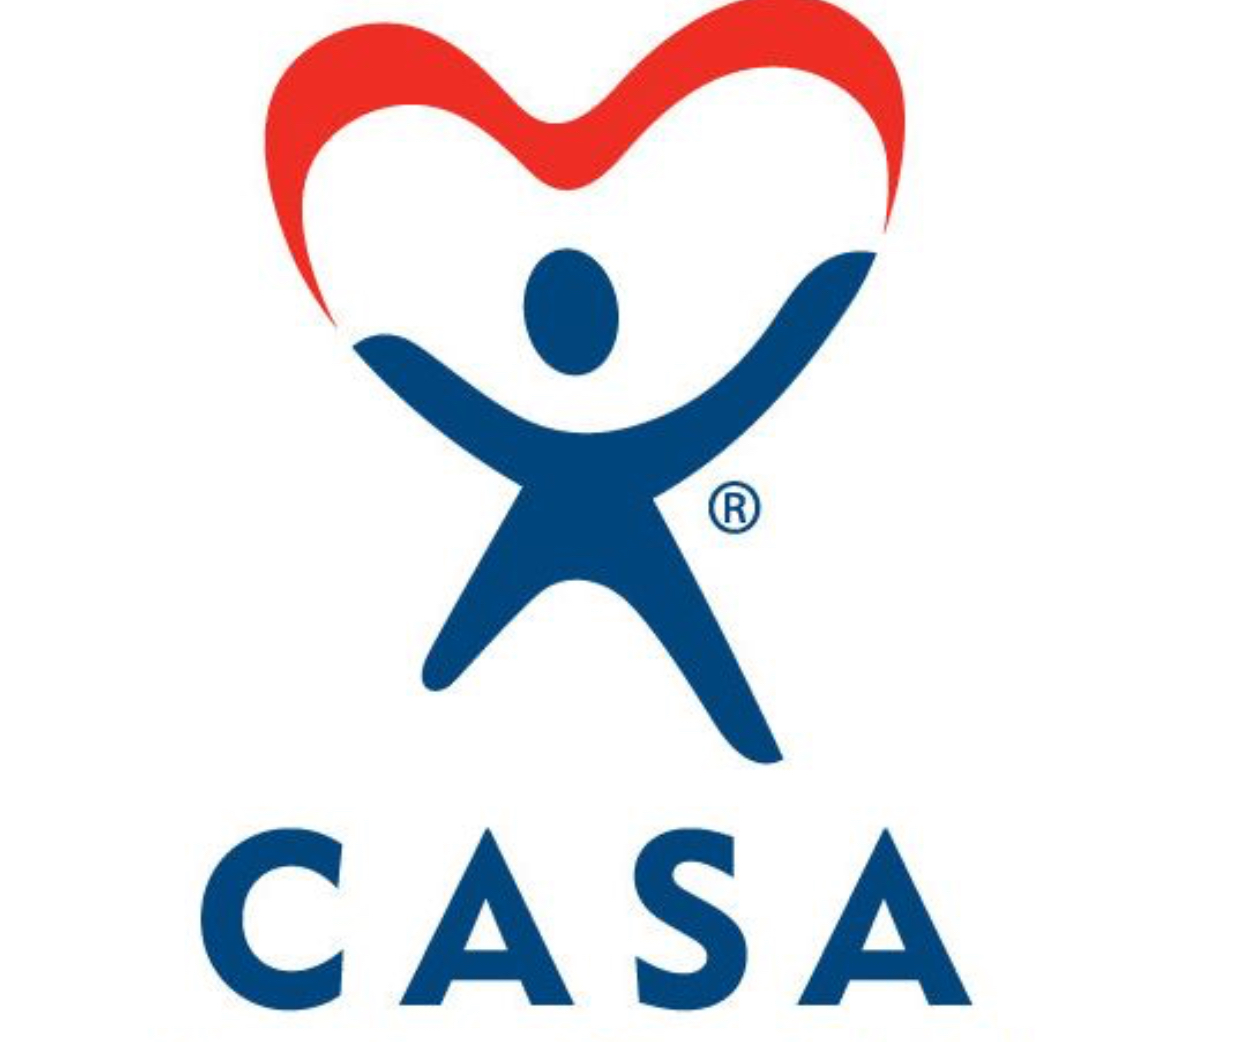 CASA Gives Neglected Children Assistance, Companionship